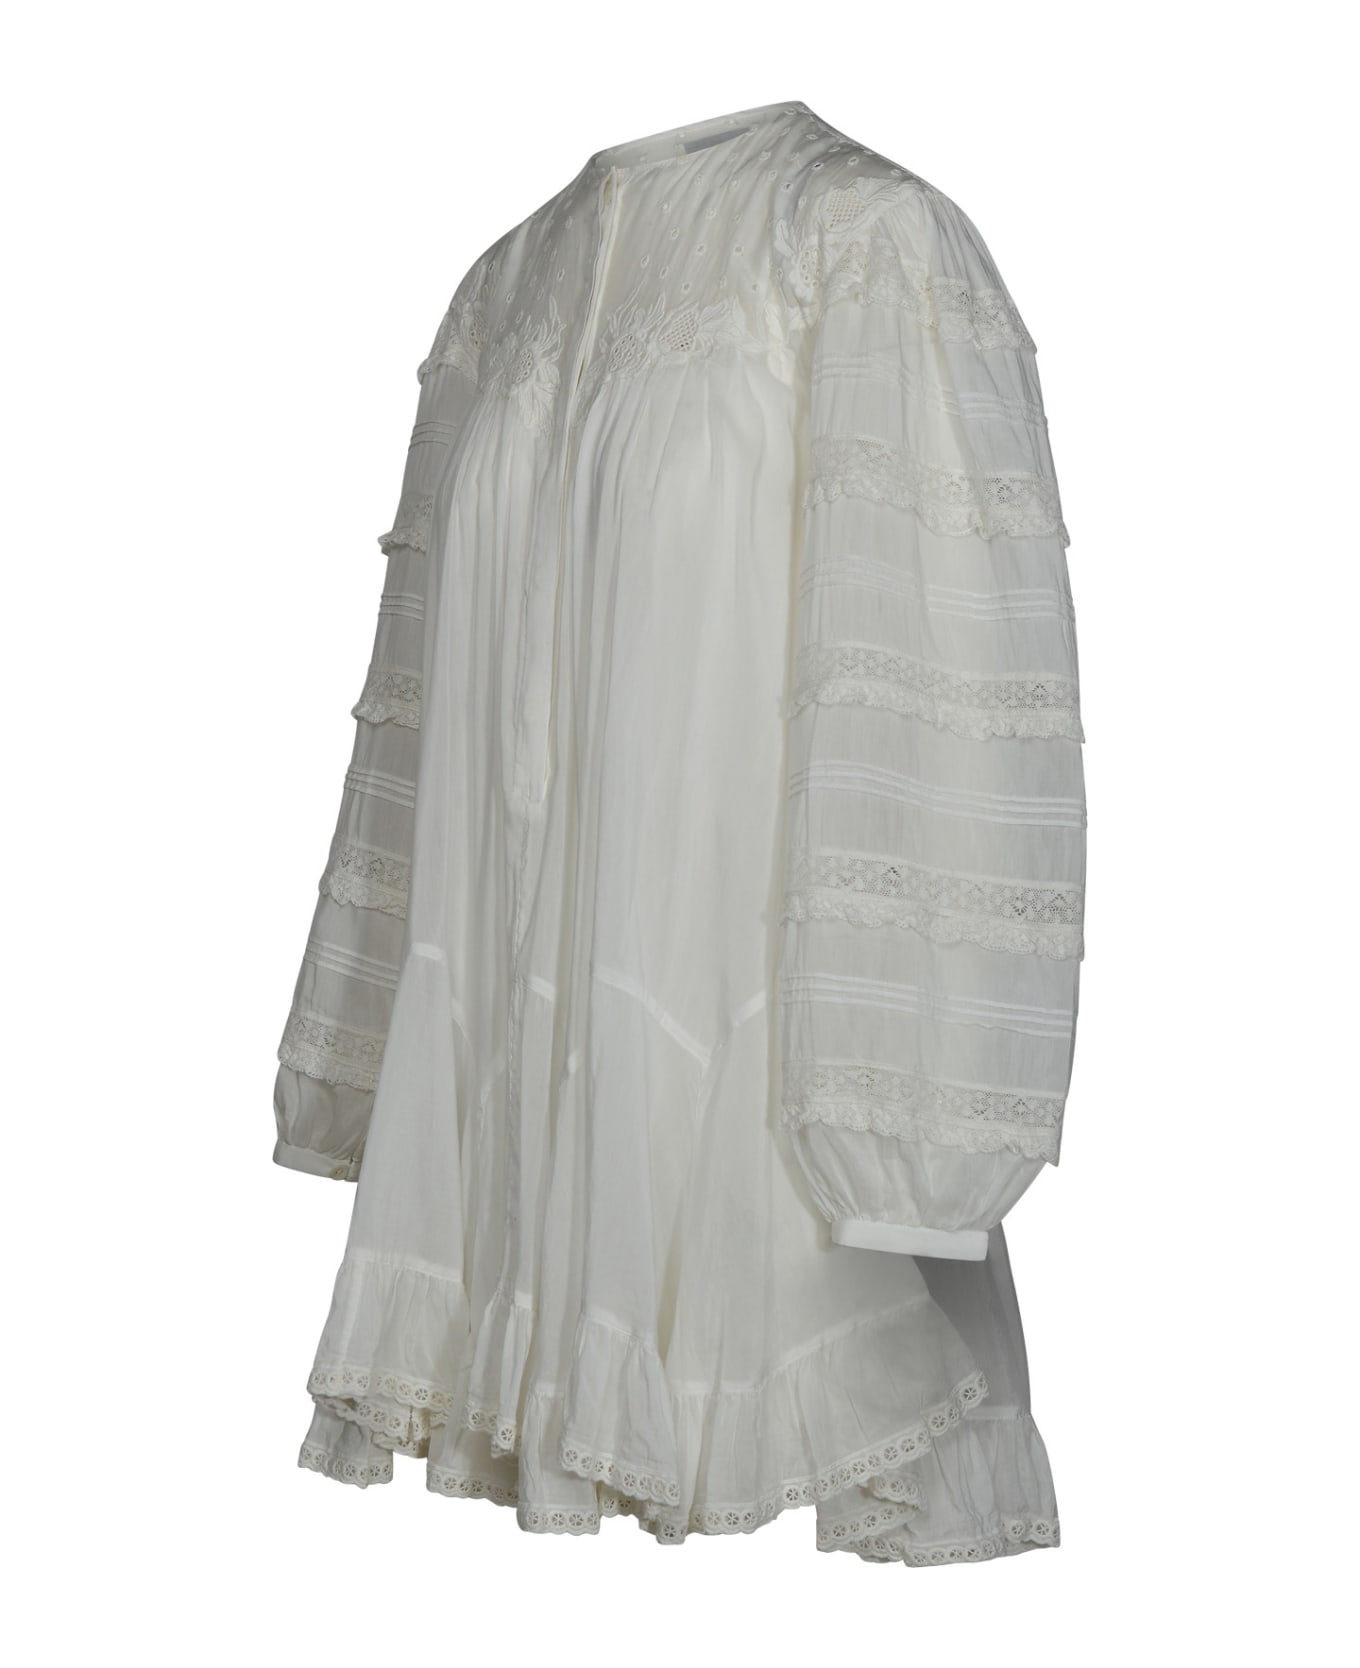 Isabel Marant 'gyliane' Dress In White Silk Blend - White ブラウス